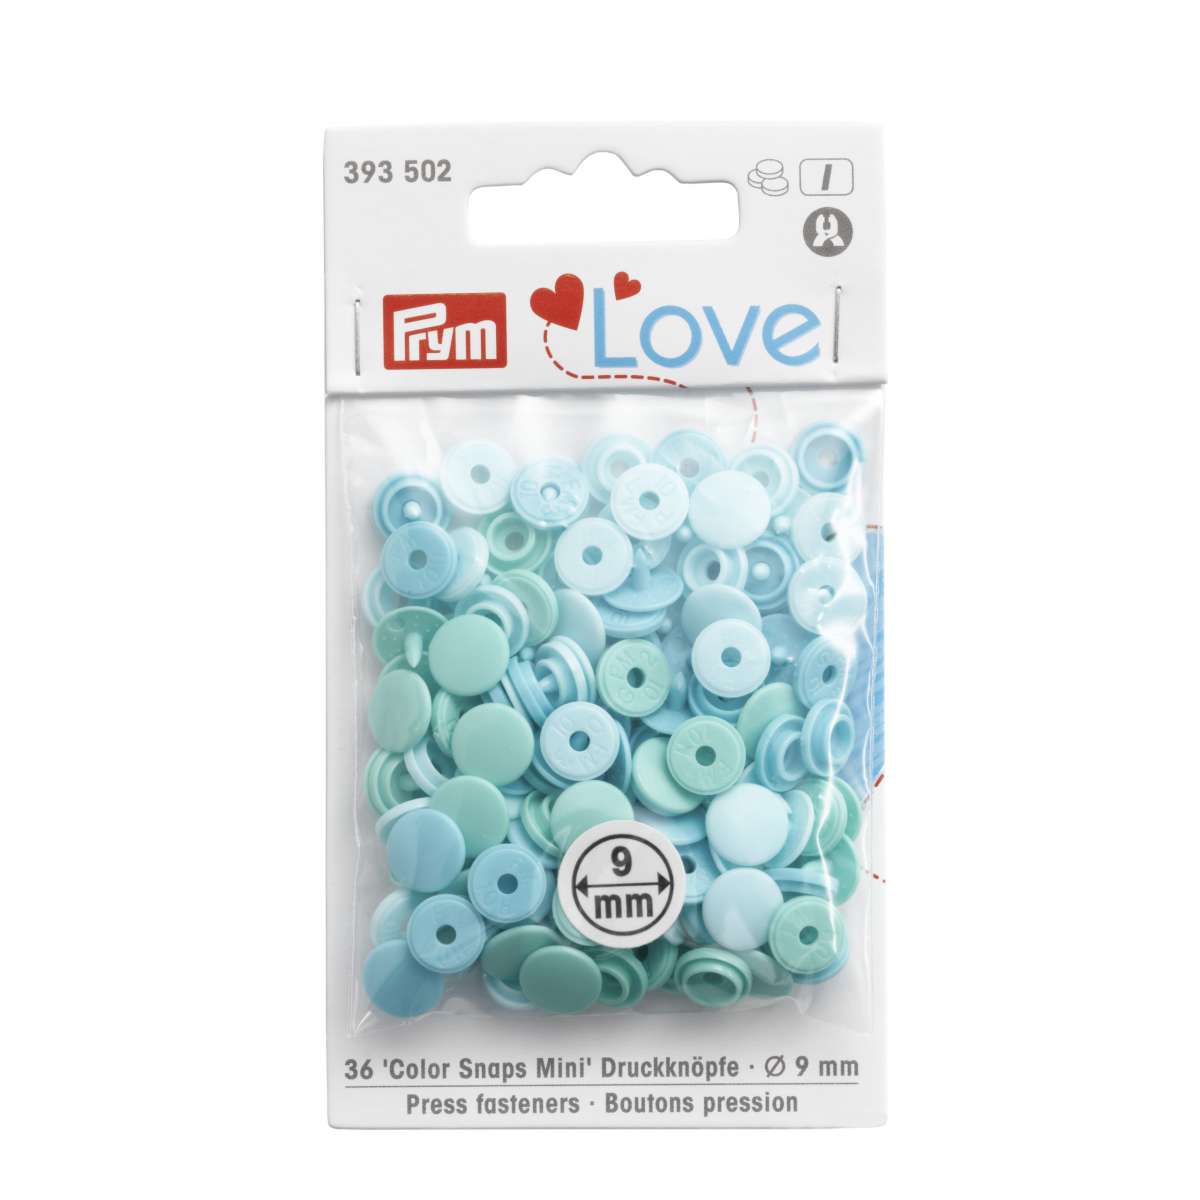 Prym Love Press fasteners Colour Snaps Mini, 9 mm, in shades of mint  